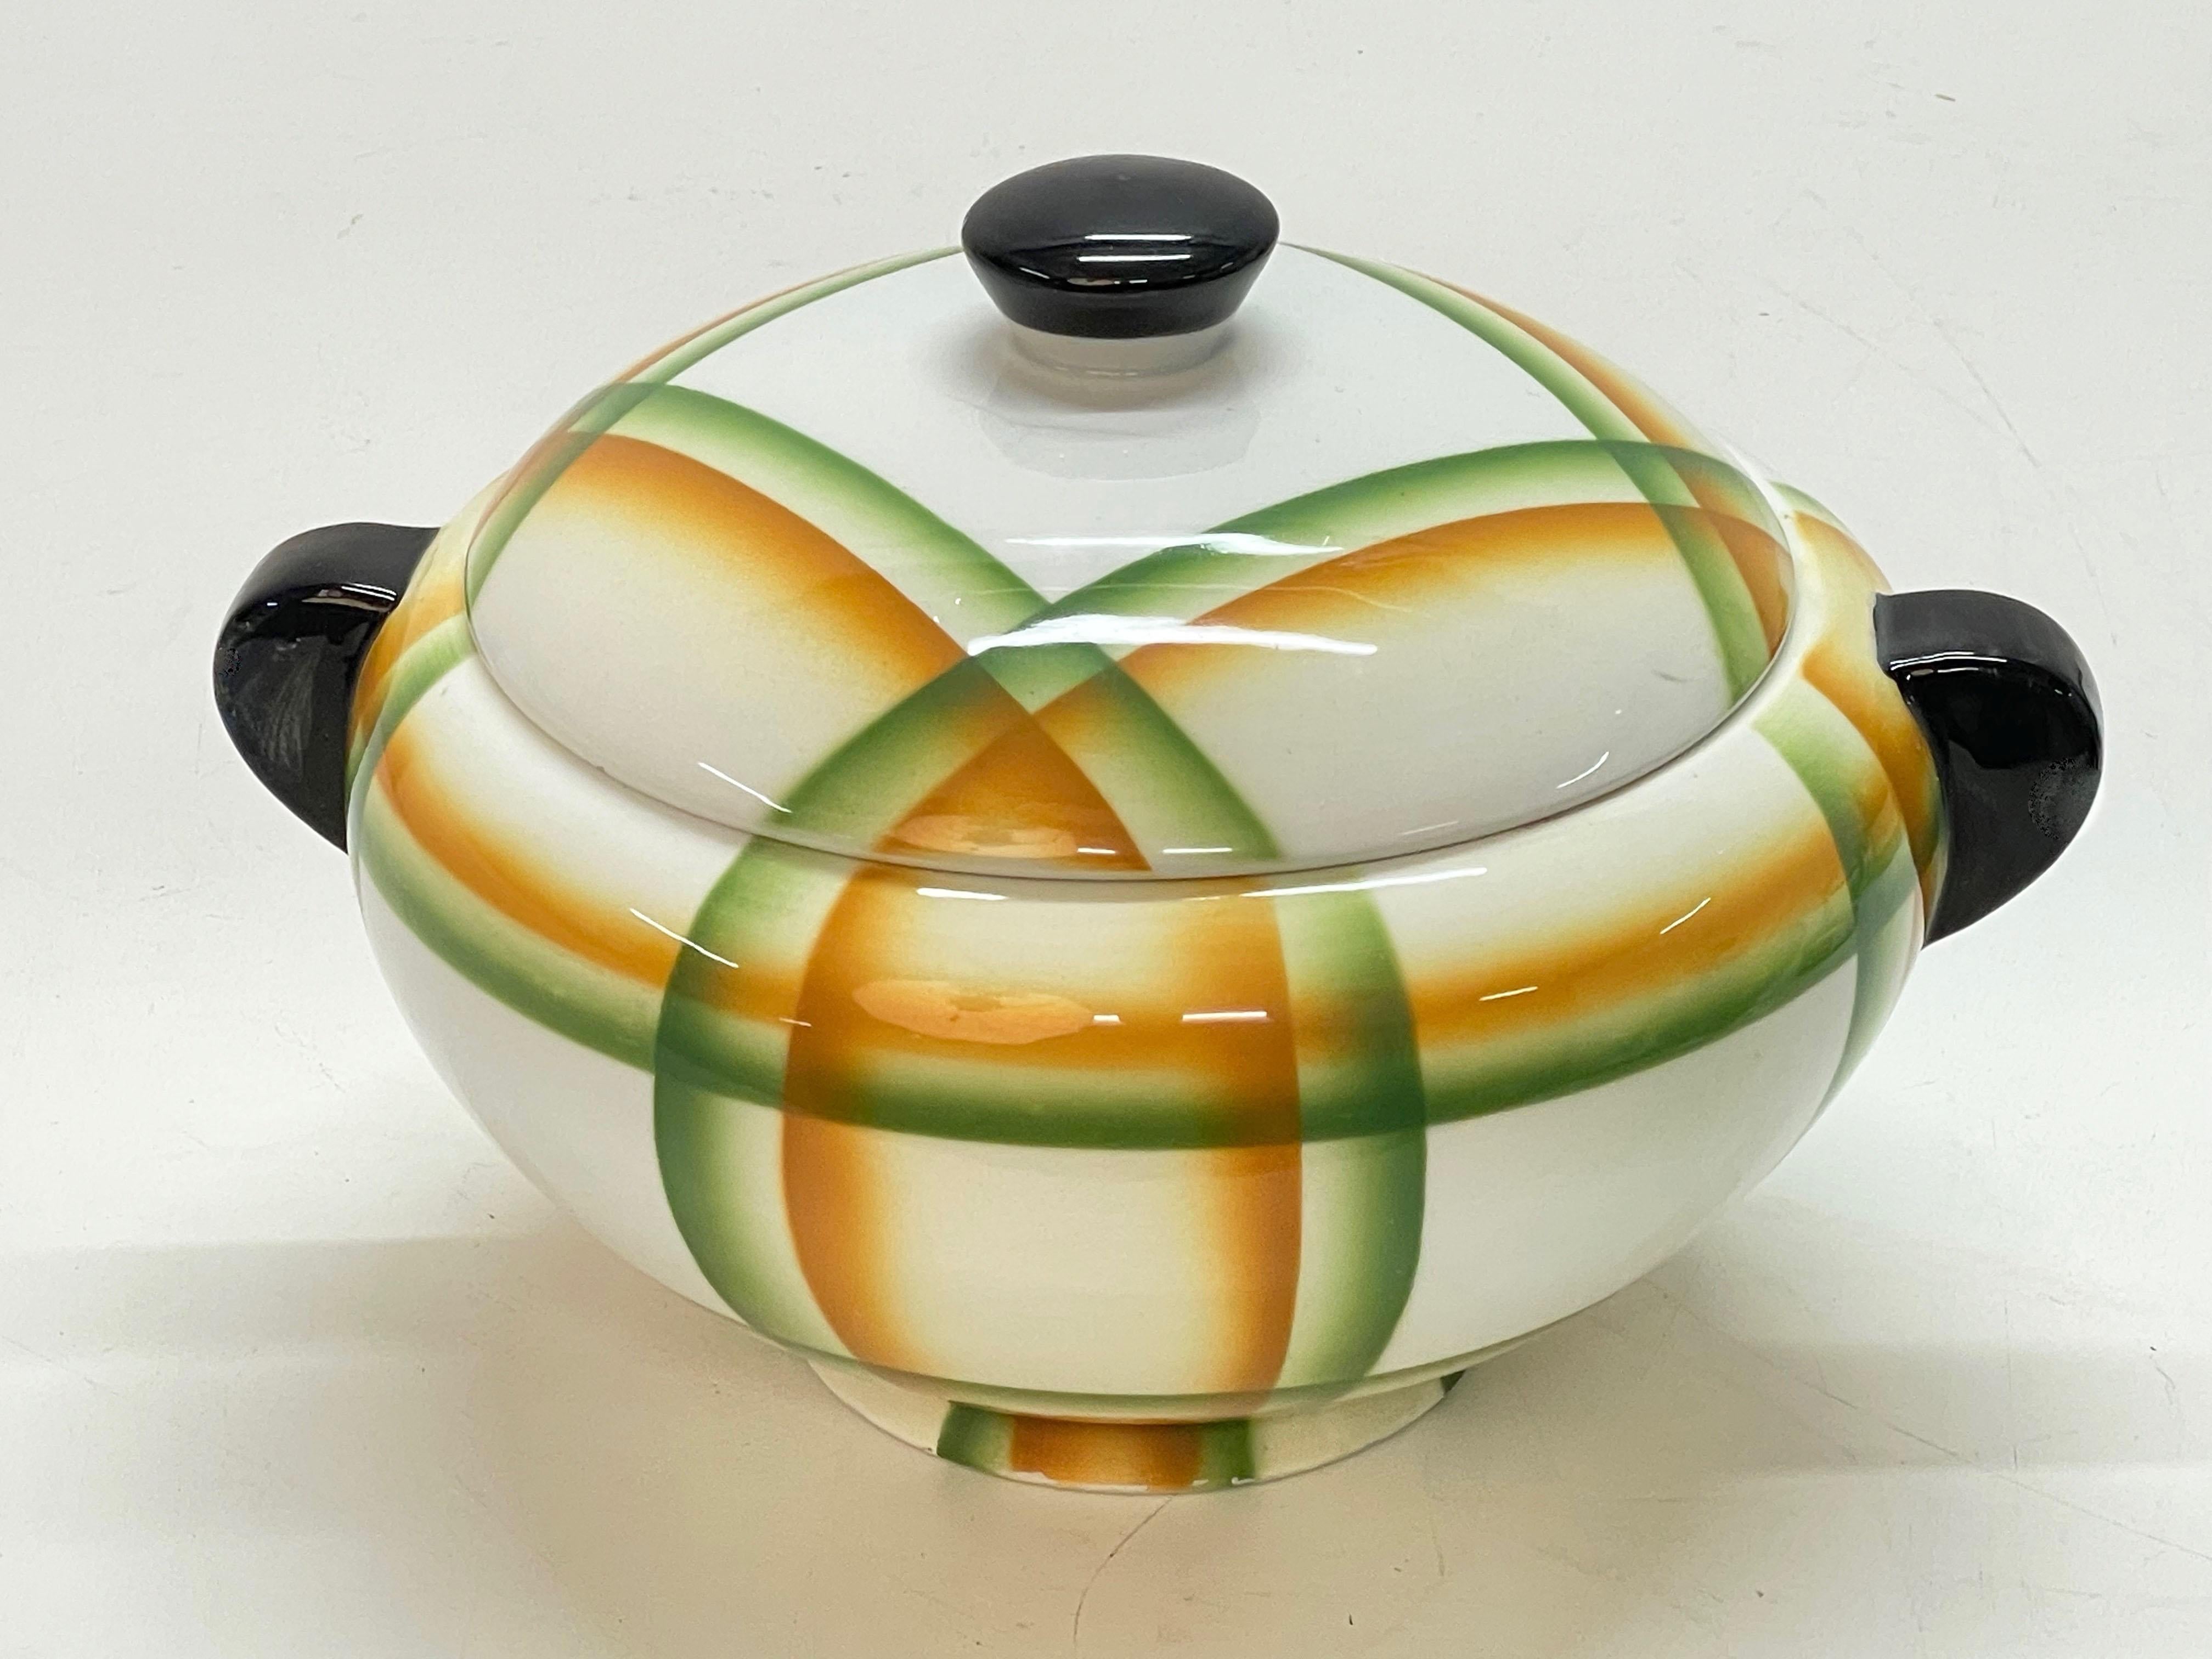 Simonetto Futuristic Airbrushed Ceramic Italian Centerpiece Soup Bowl, 1930s For Sale 4